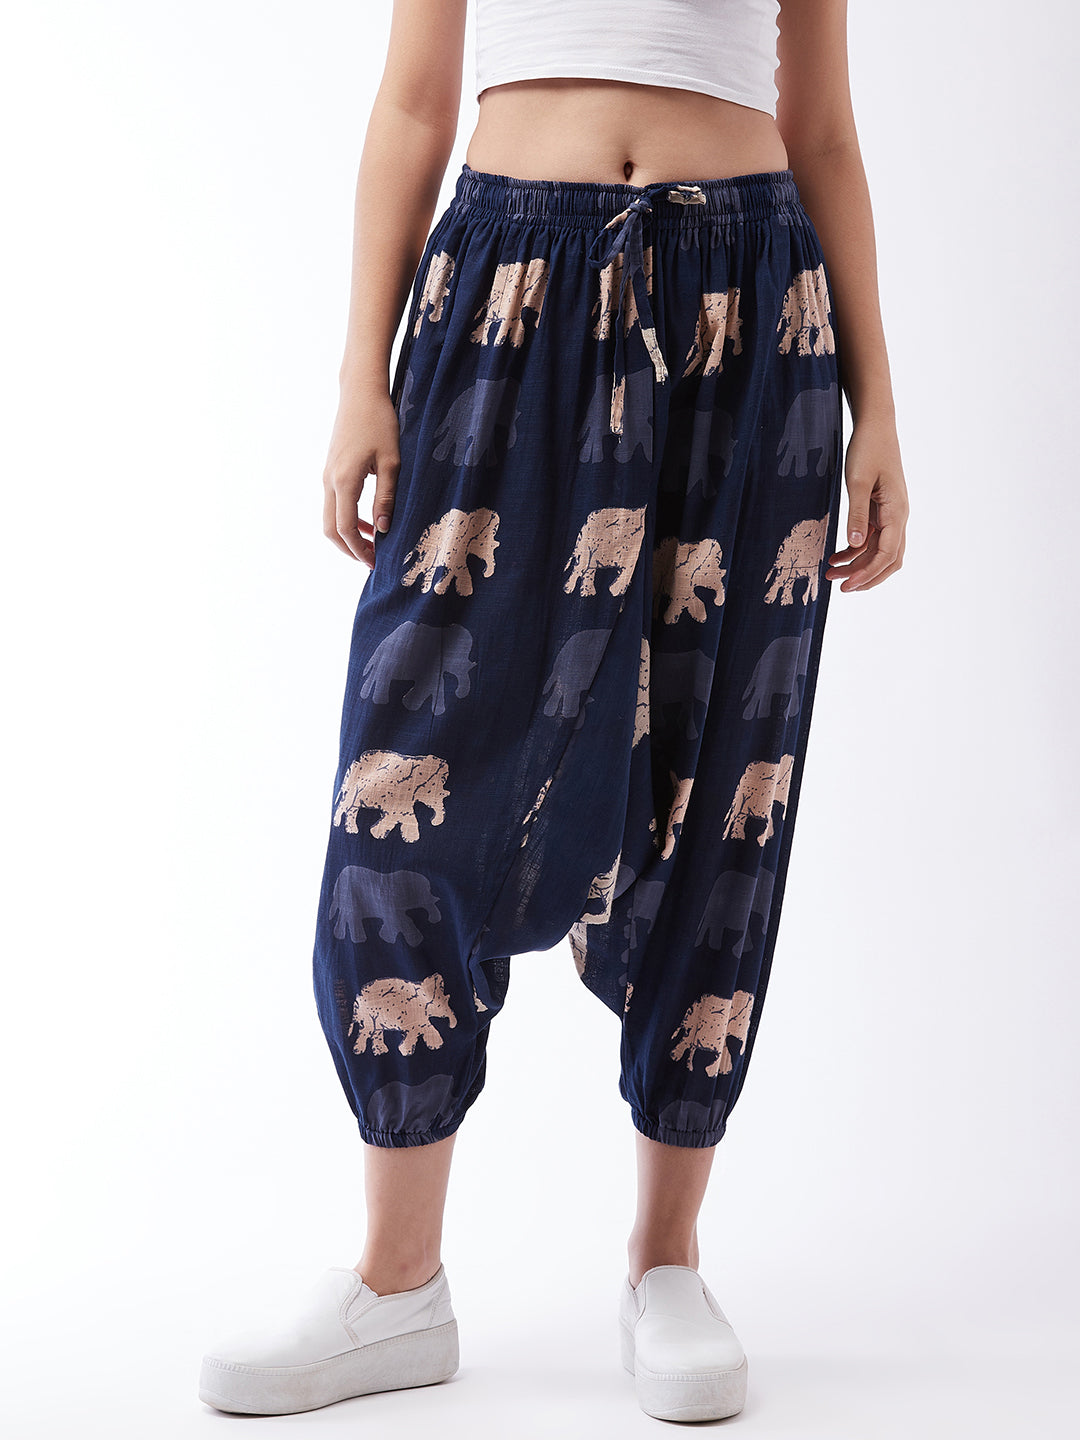 Elephant Print Harem Pants For Teens